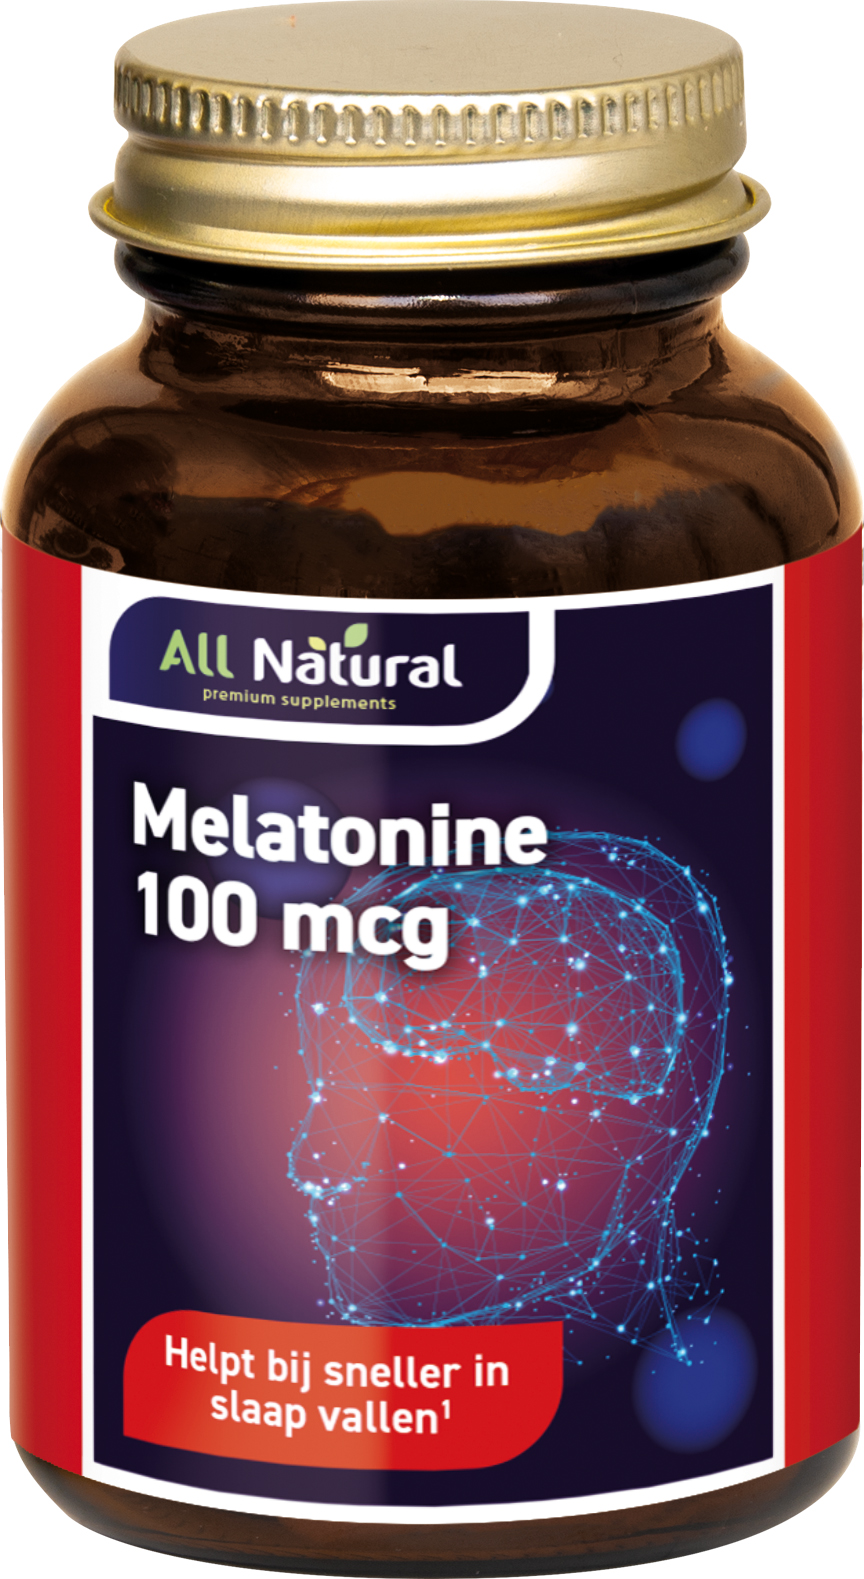 All Natural Melatonine 100 mcg Tabletten kopen